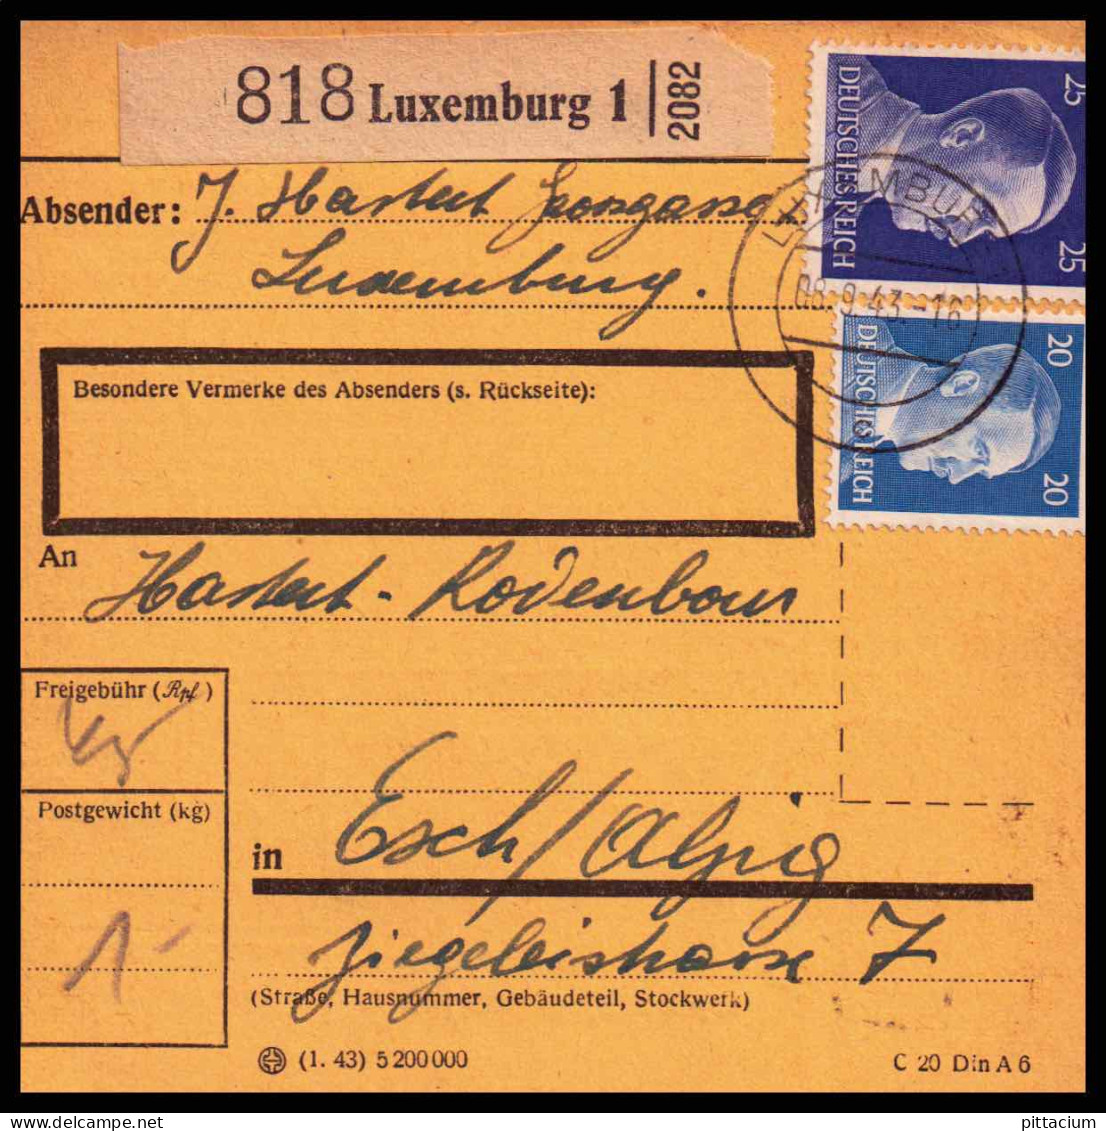 Luxemburg 1943: Paketkarte  | Besatzung, Absenderpostamt, Bezirksämter | Luxemburg;Luxembourg, Esch An Der Alzette;Esch- - 1940-1944 Deutsche Besatzung